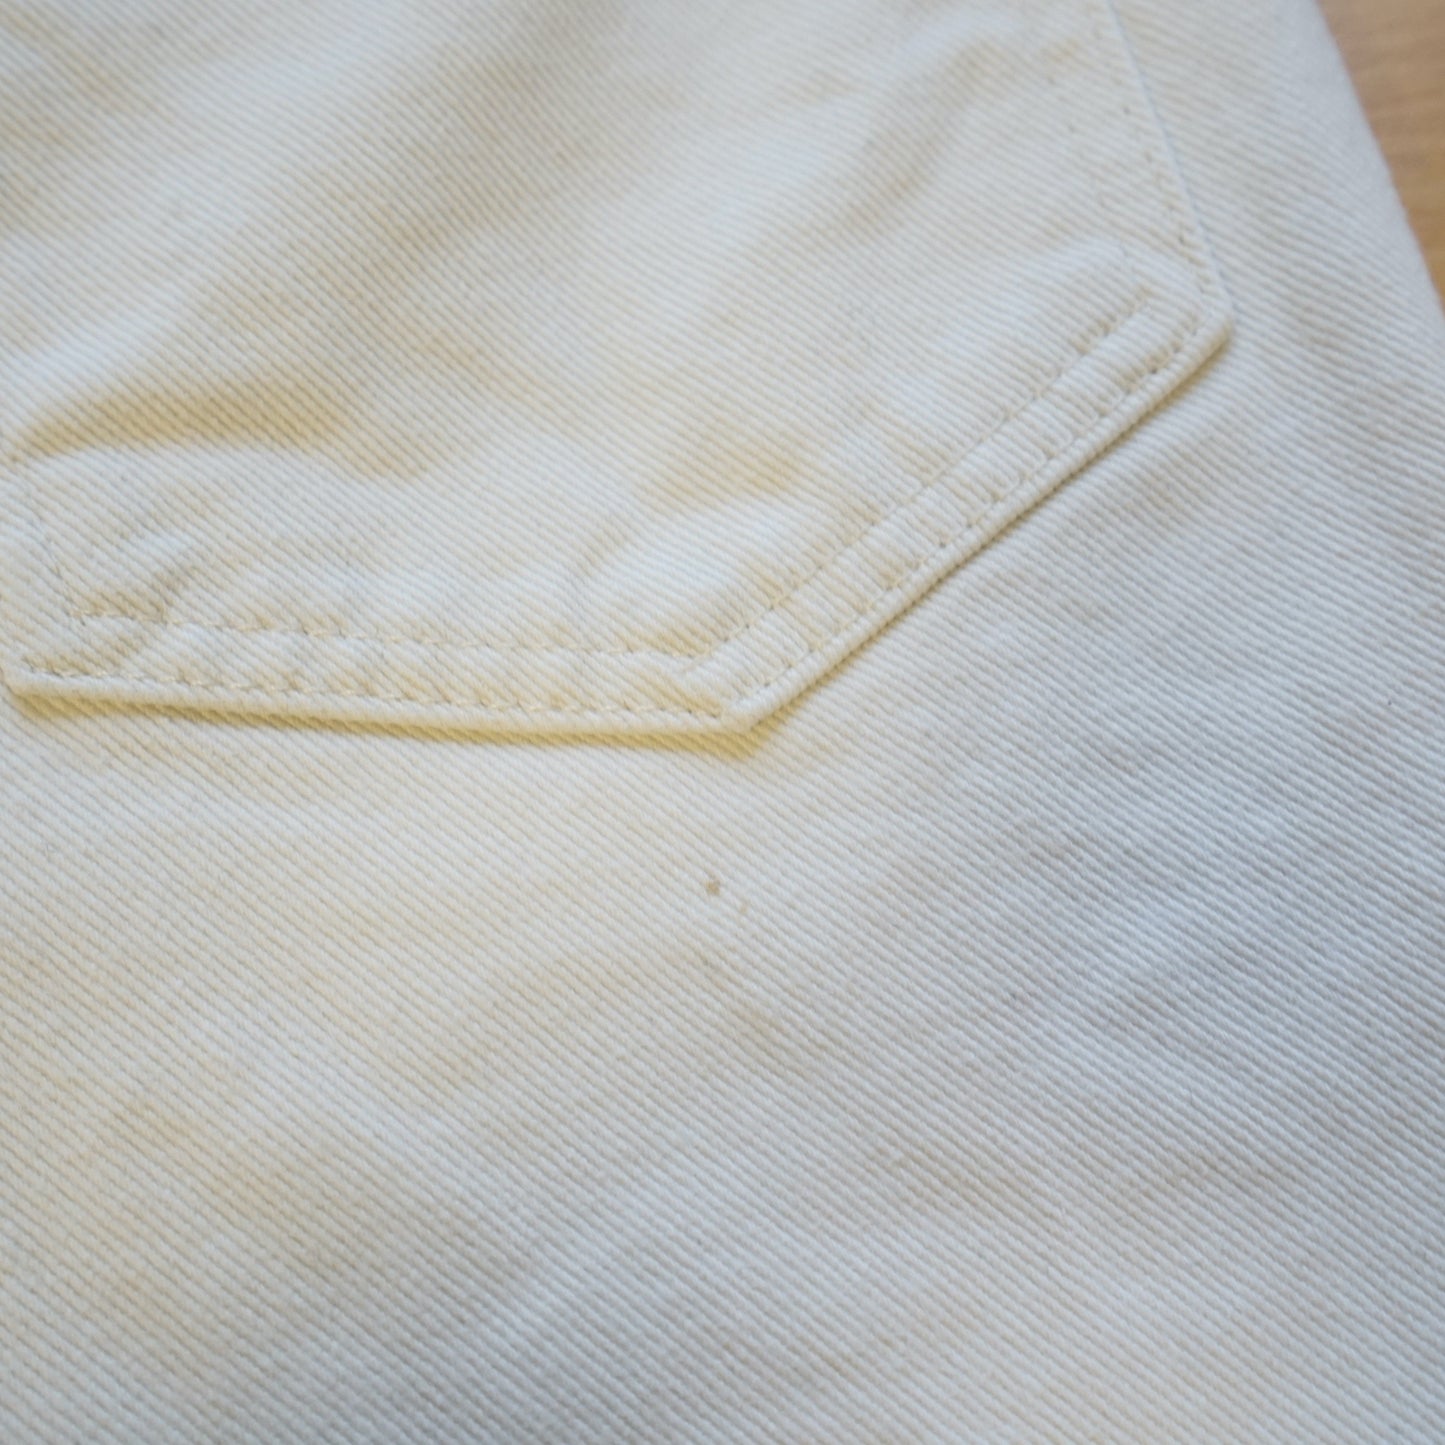 Vintage white denim Shorts Size XS-S